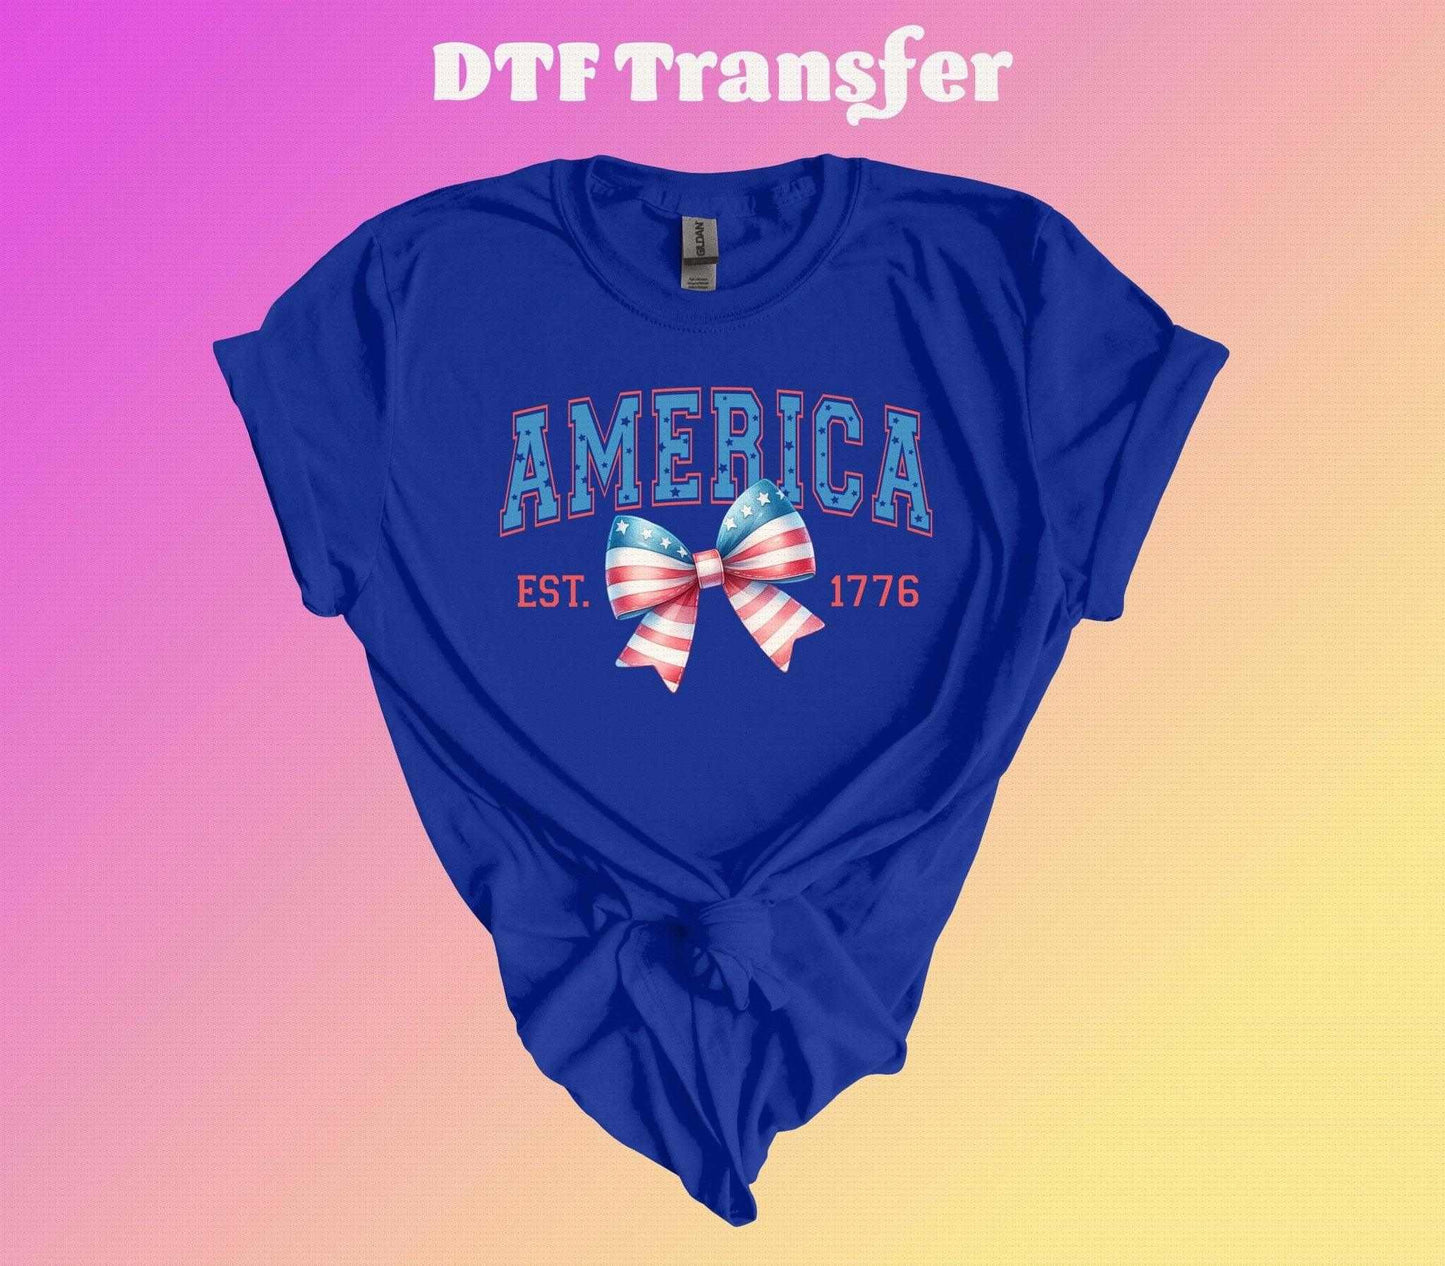 America Established 1776 DTF Transfer - Imagine With Aloha